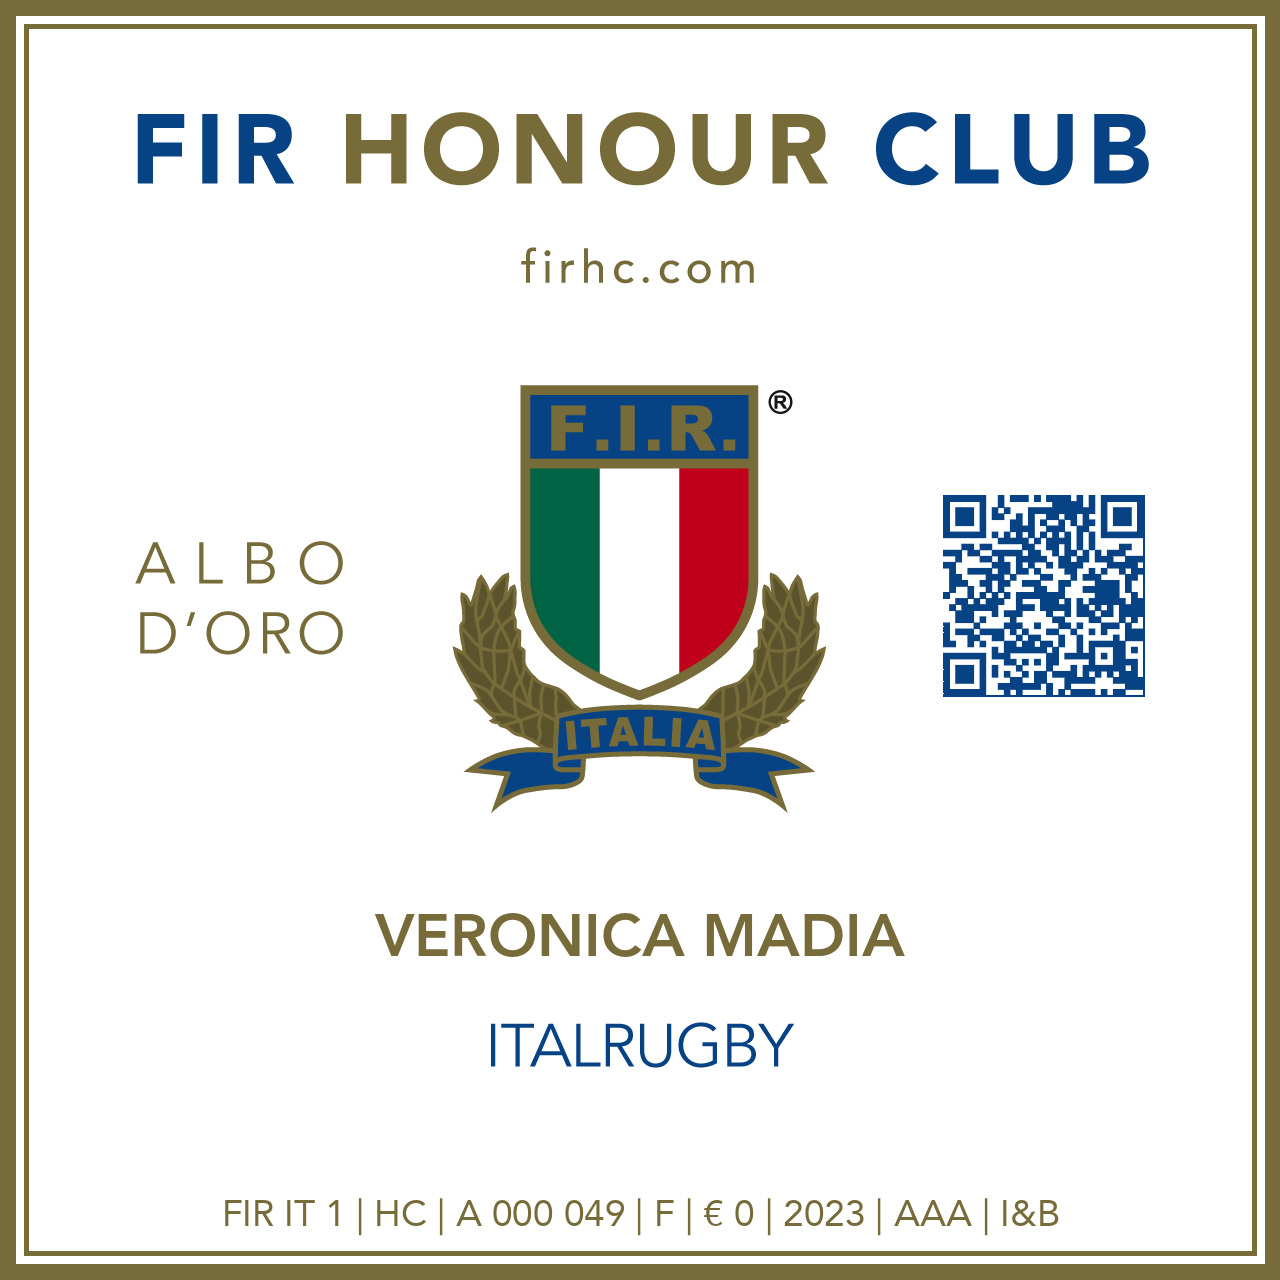 FIR Honour Club - Token Id A 000 049 - VERONICA MADIA